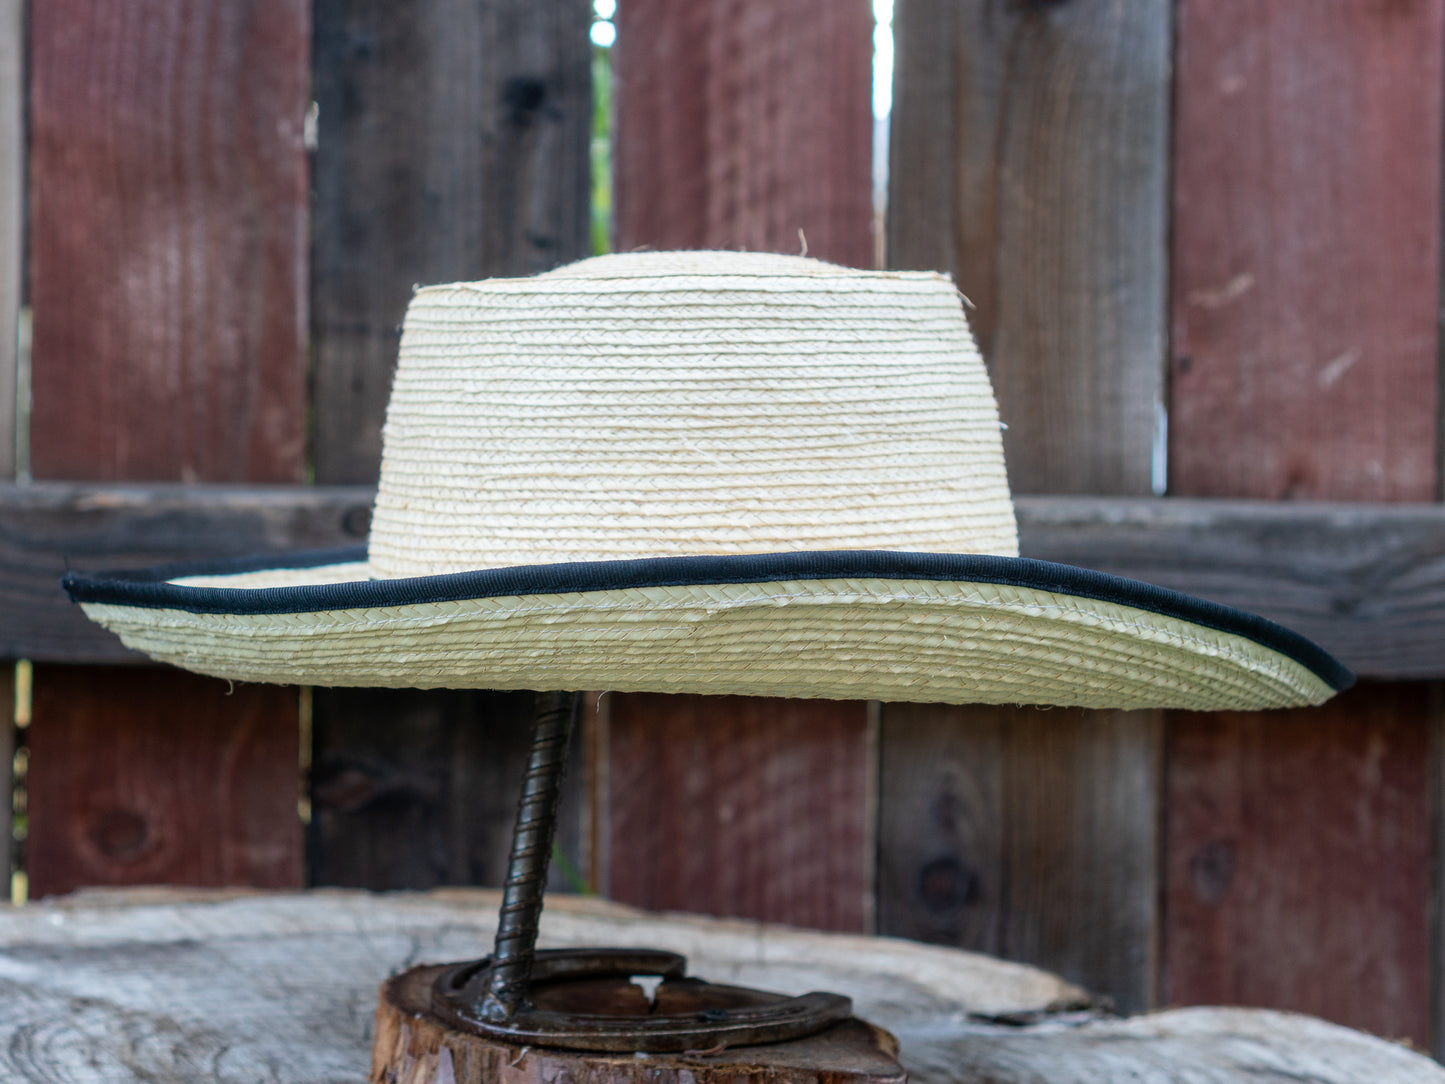 SunBody Hats Guatemala Reata Crease Bound Edge Black Palm Leaf Hat Tan